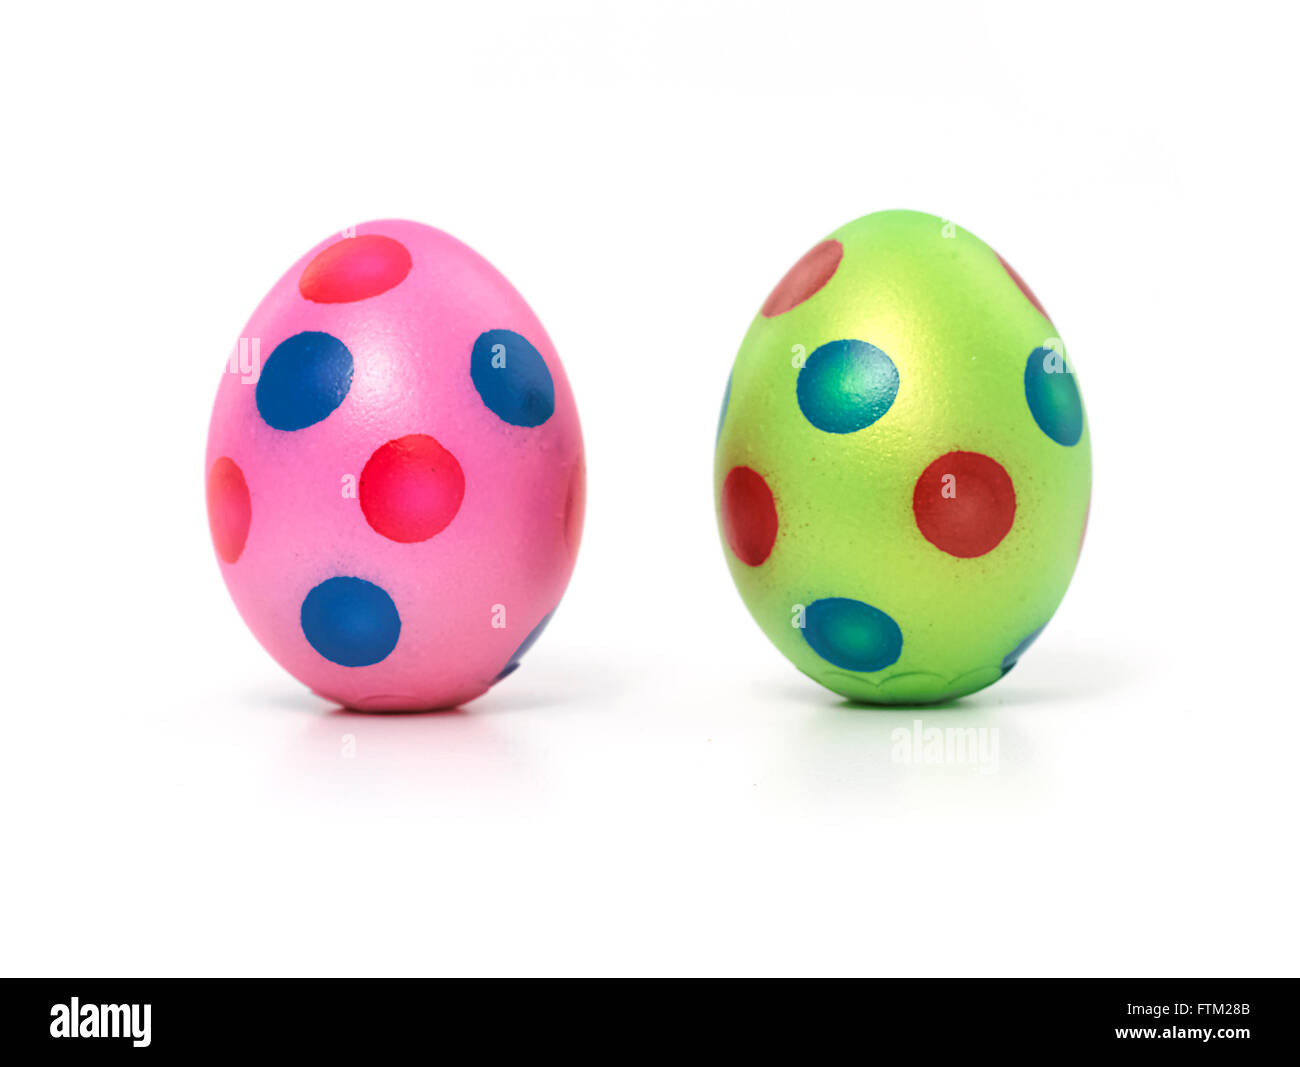 2 Easter eggs Stock Photo